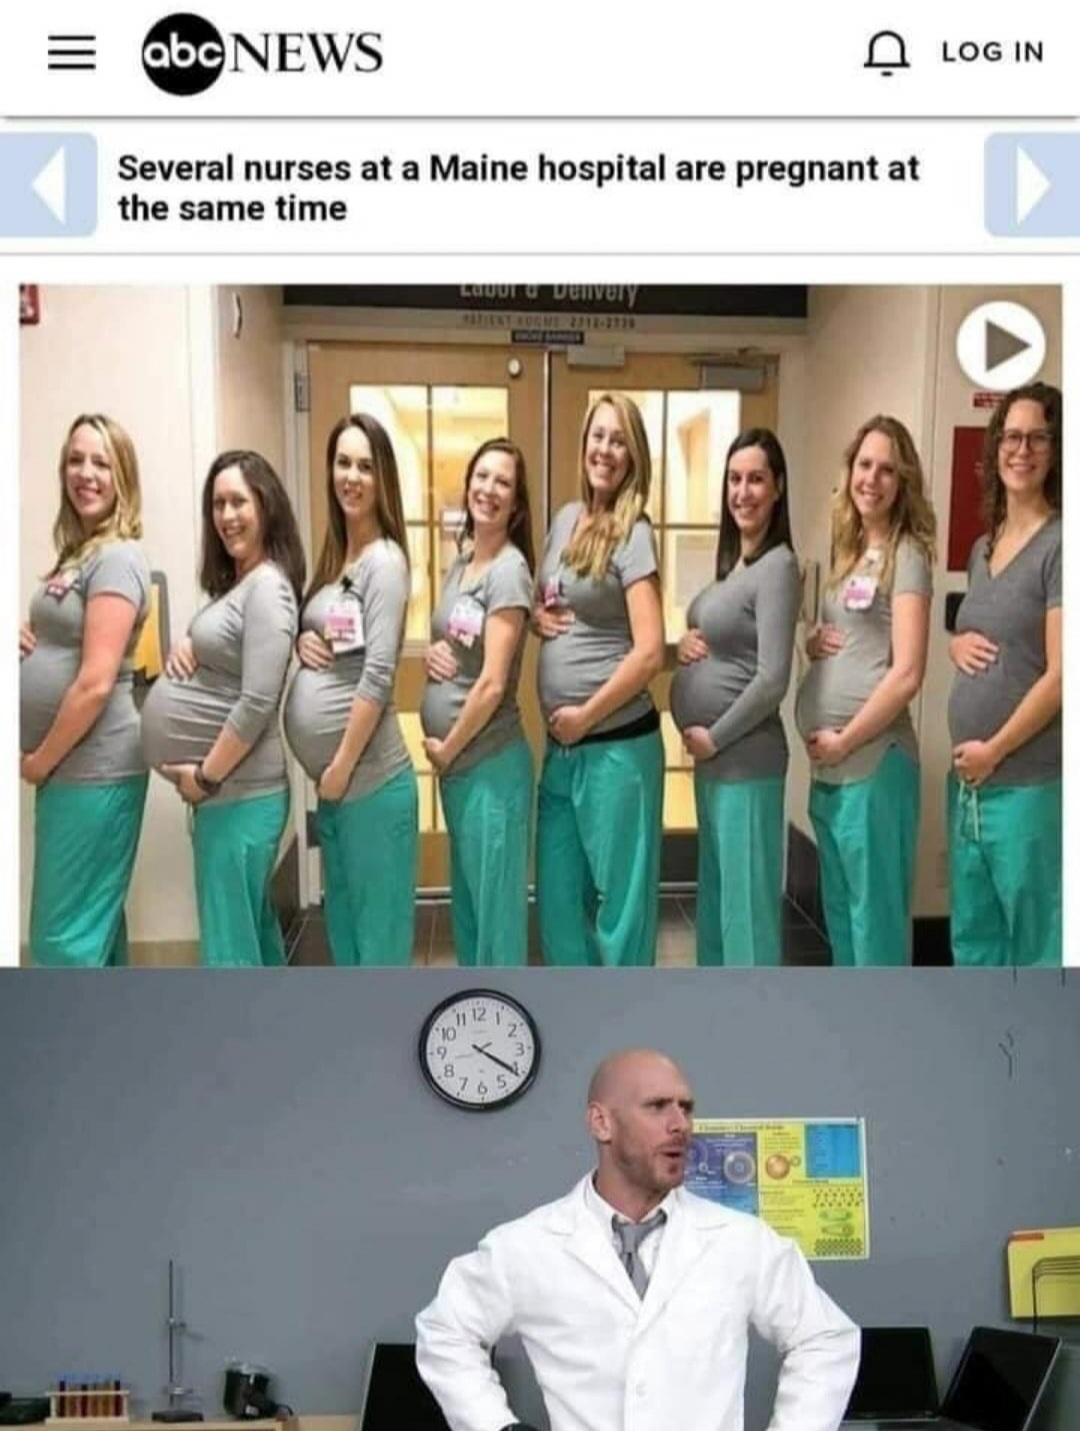 funny random pics - pregnant nurses meme - abc News A Log In Several nurses at a Maine hospital are pregnant at the same time Luvru vunvary 11 12 1 10 2 9 3 8 b 5